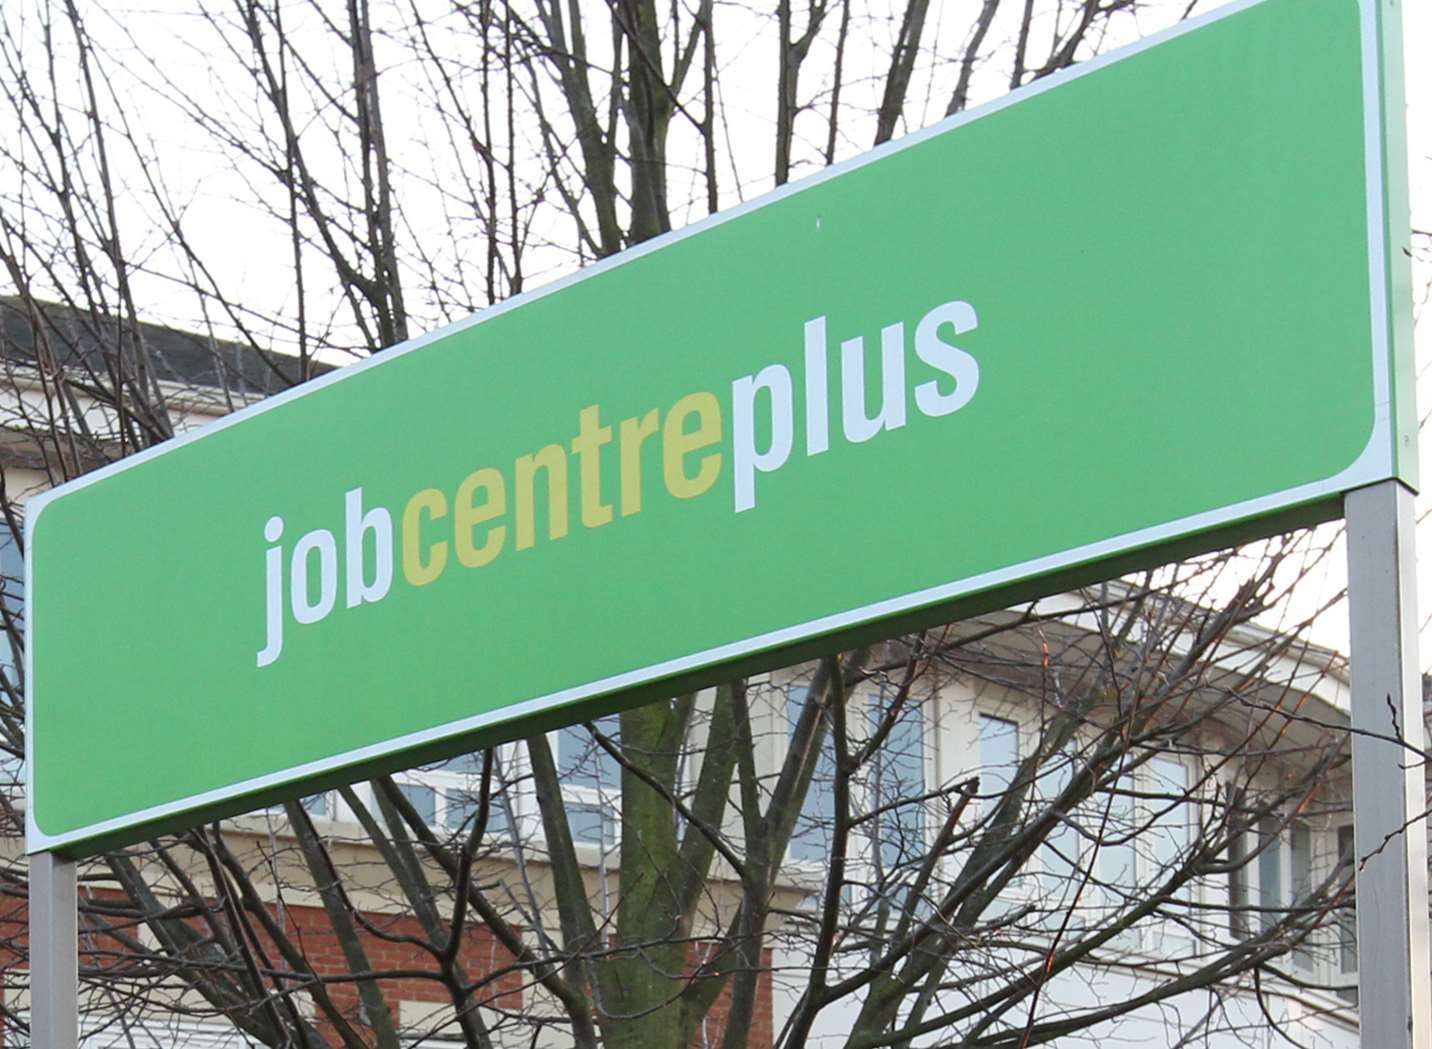 It isn't all gloom for job seekers in Kent